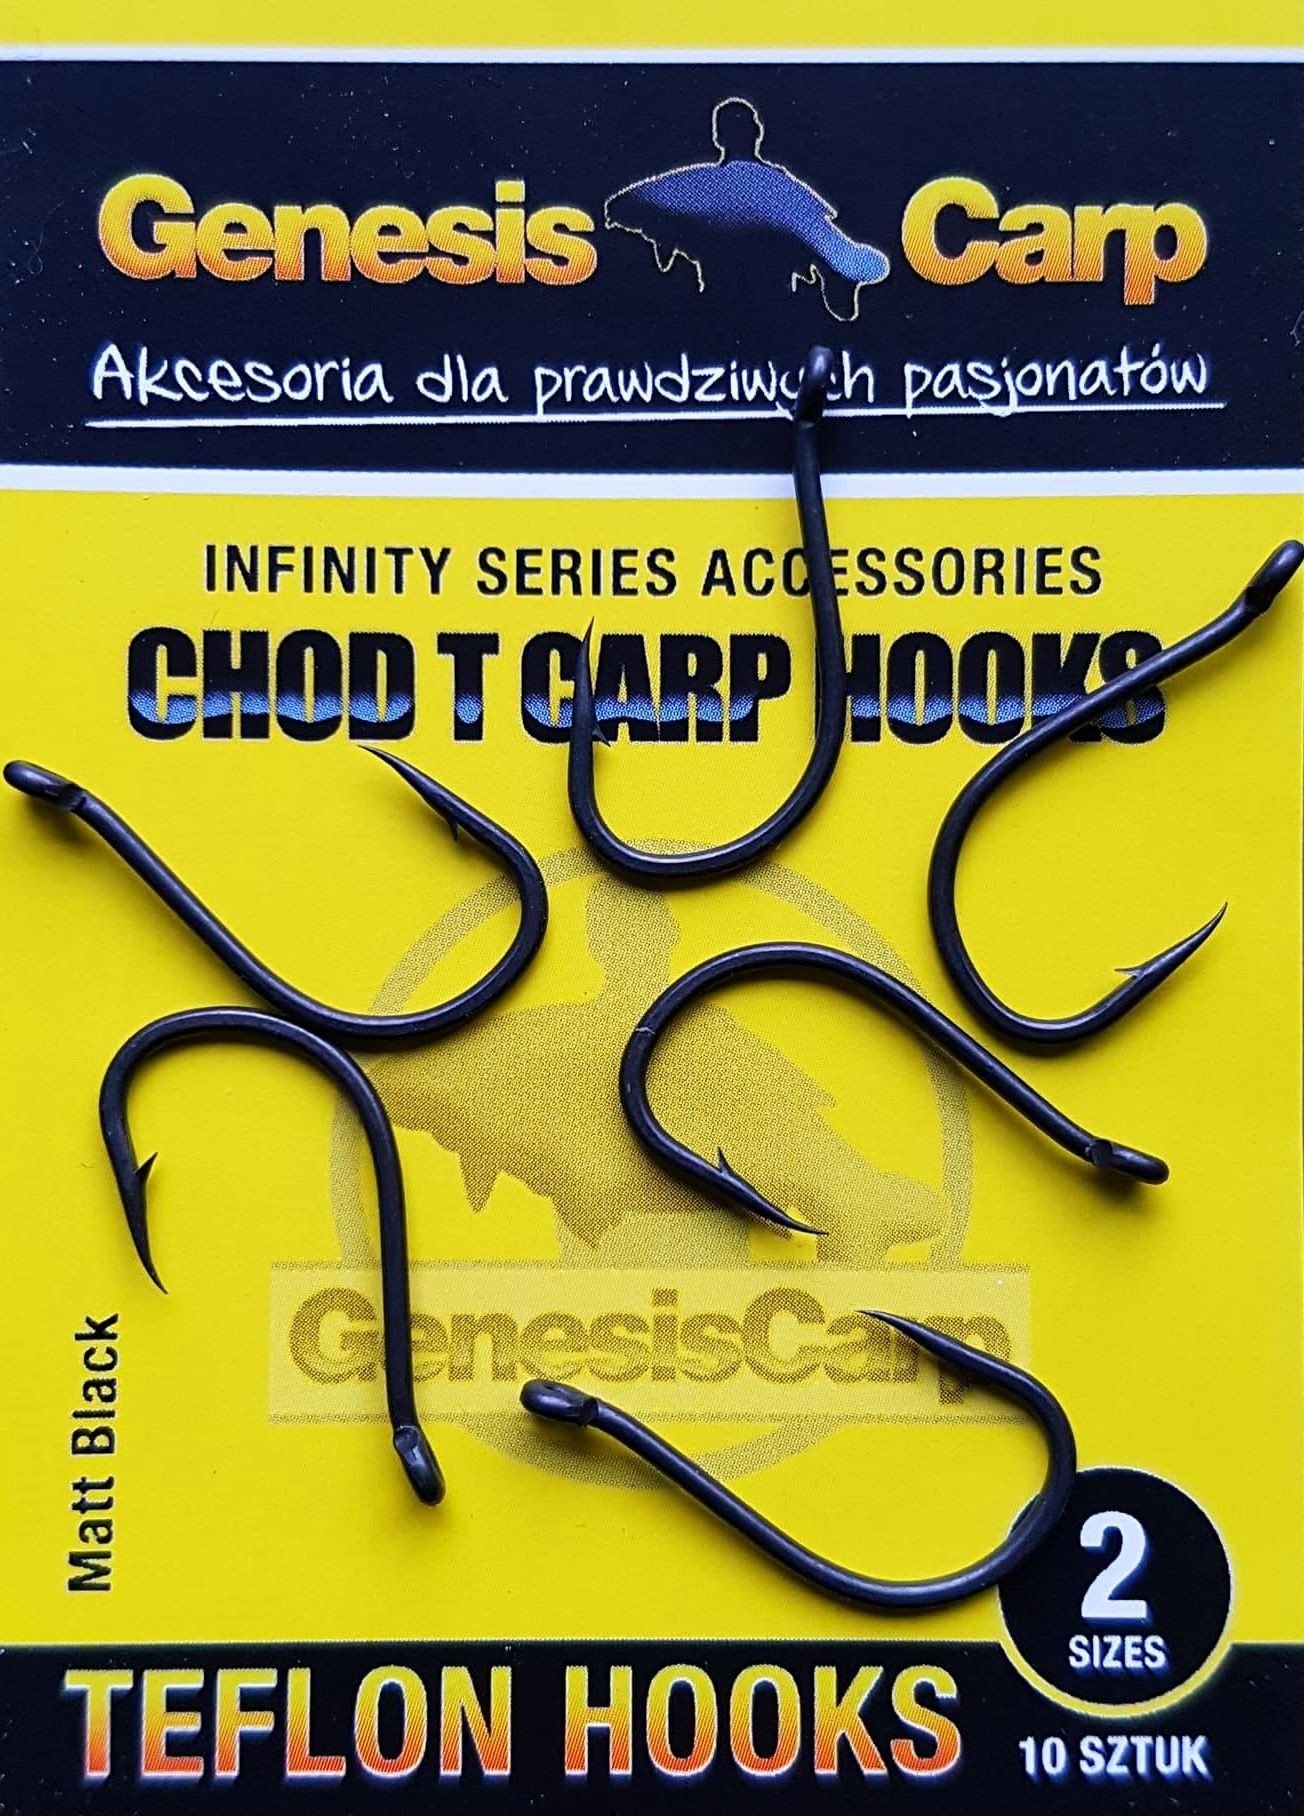 GENESIS CARP Chod T Carp Hooks size 6 -  - Sklep